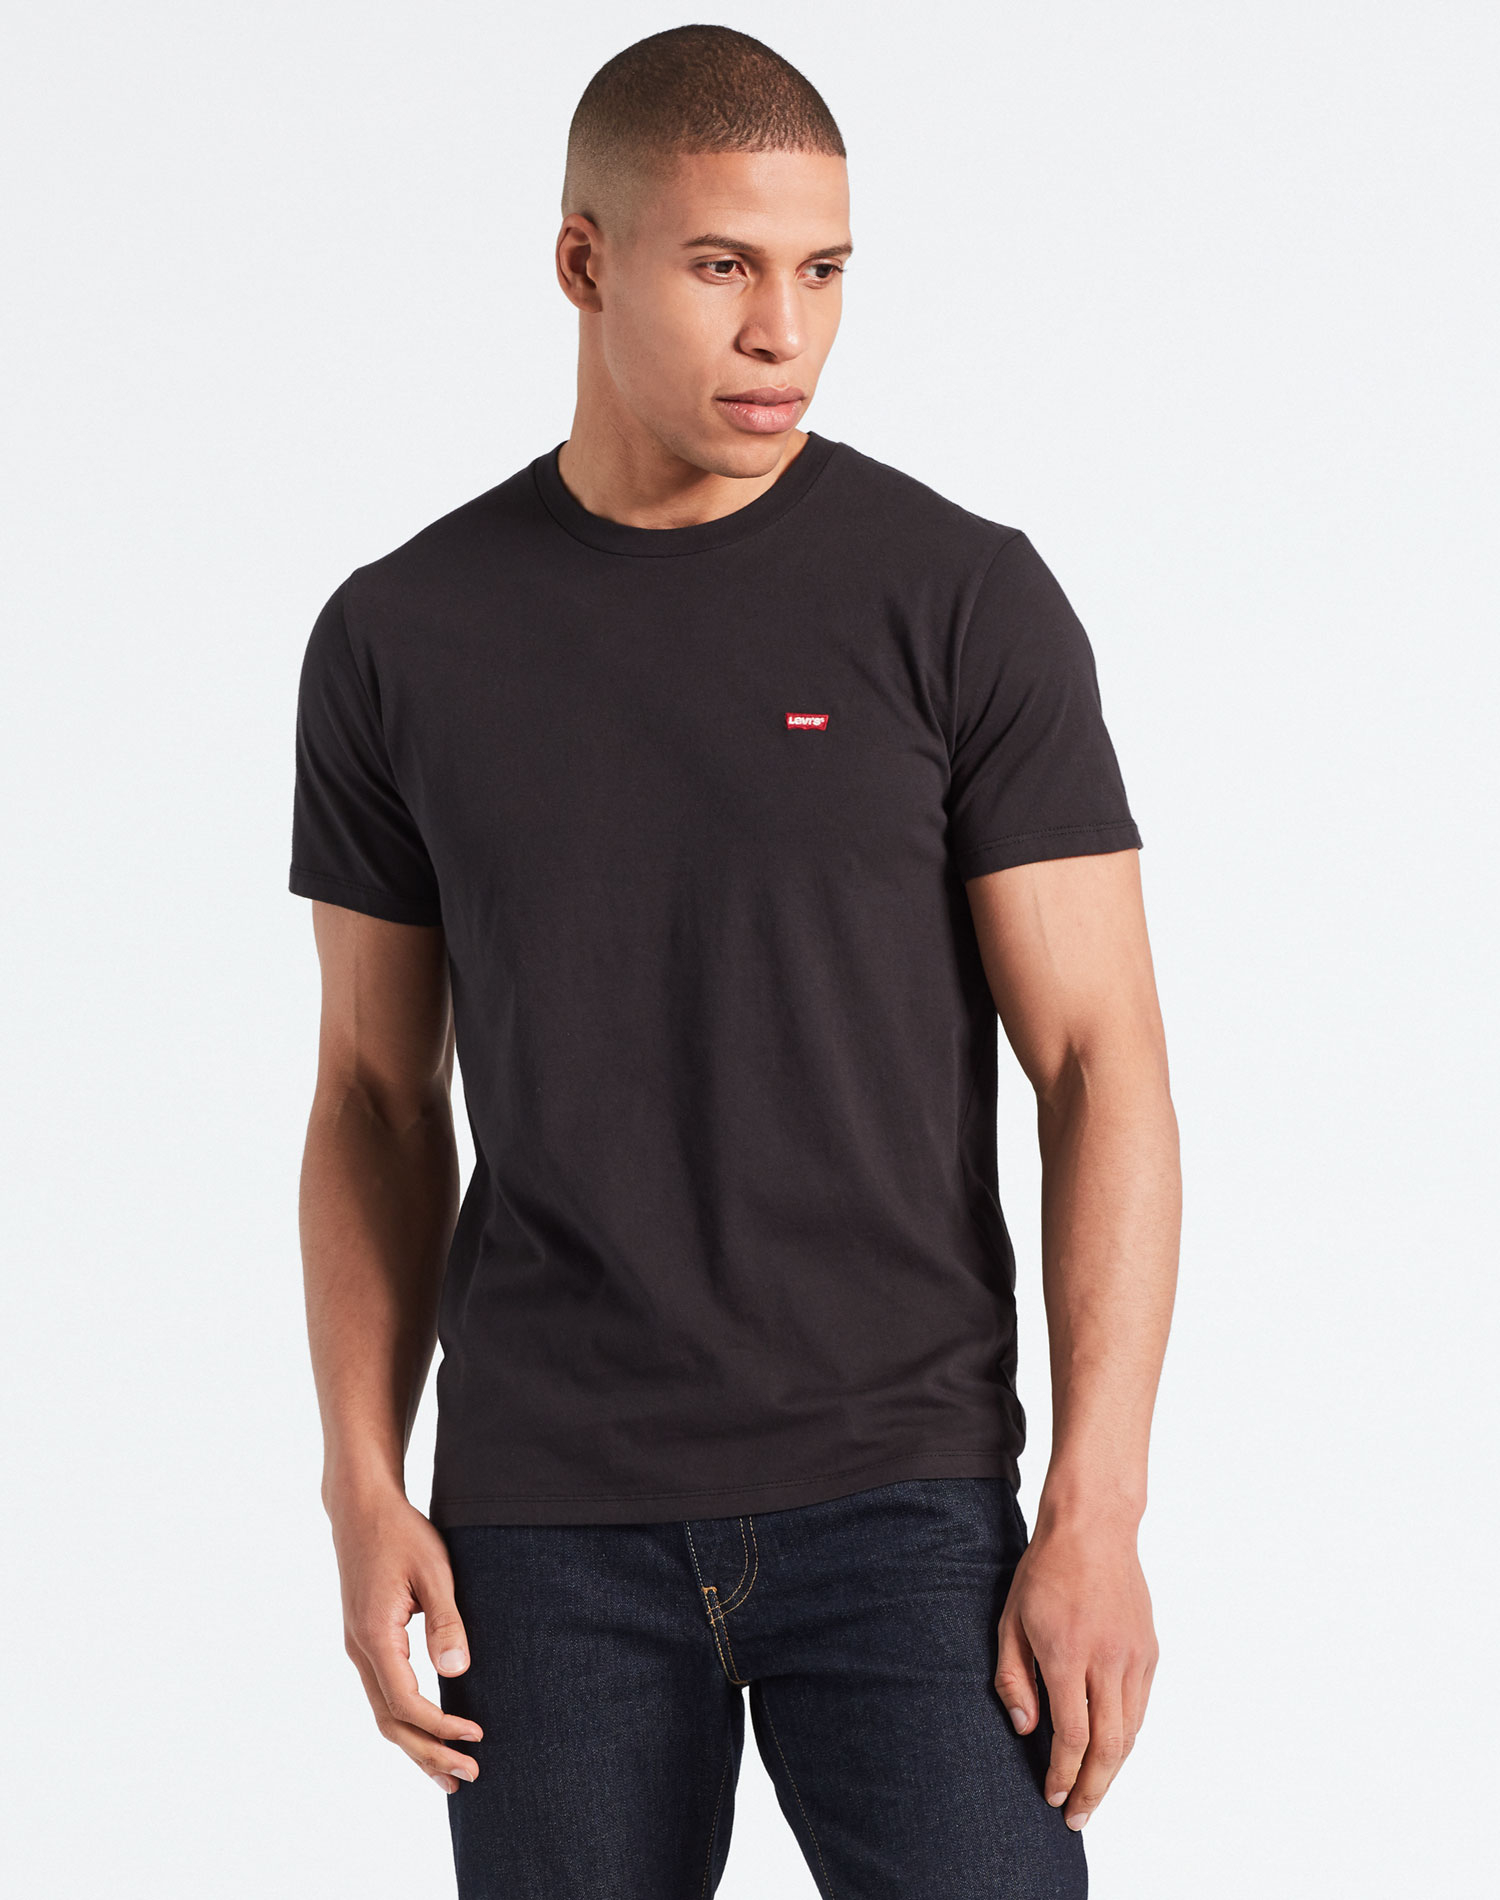 Levi’s® camiseta de hombre de m/c 56605-0009 negra